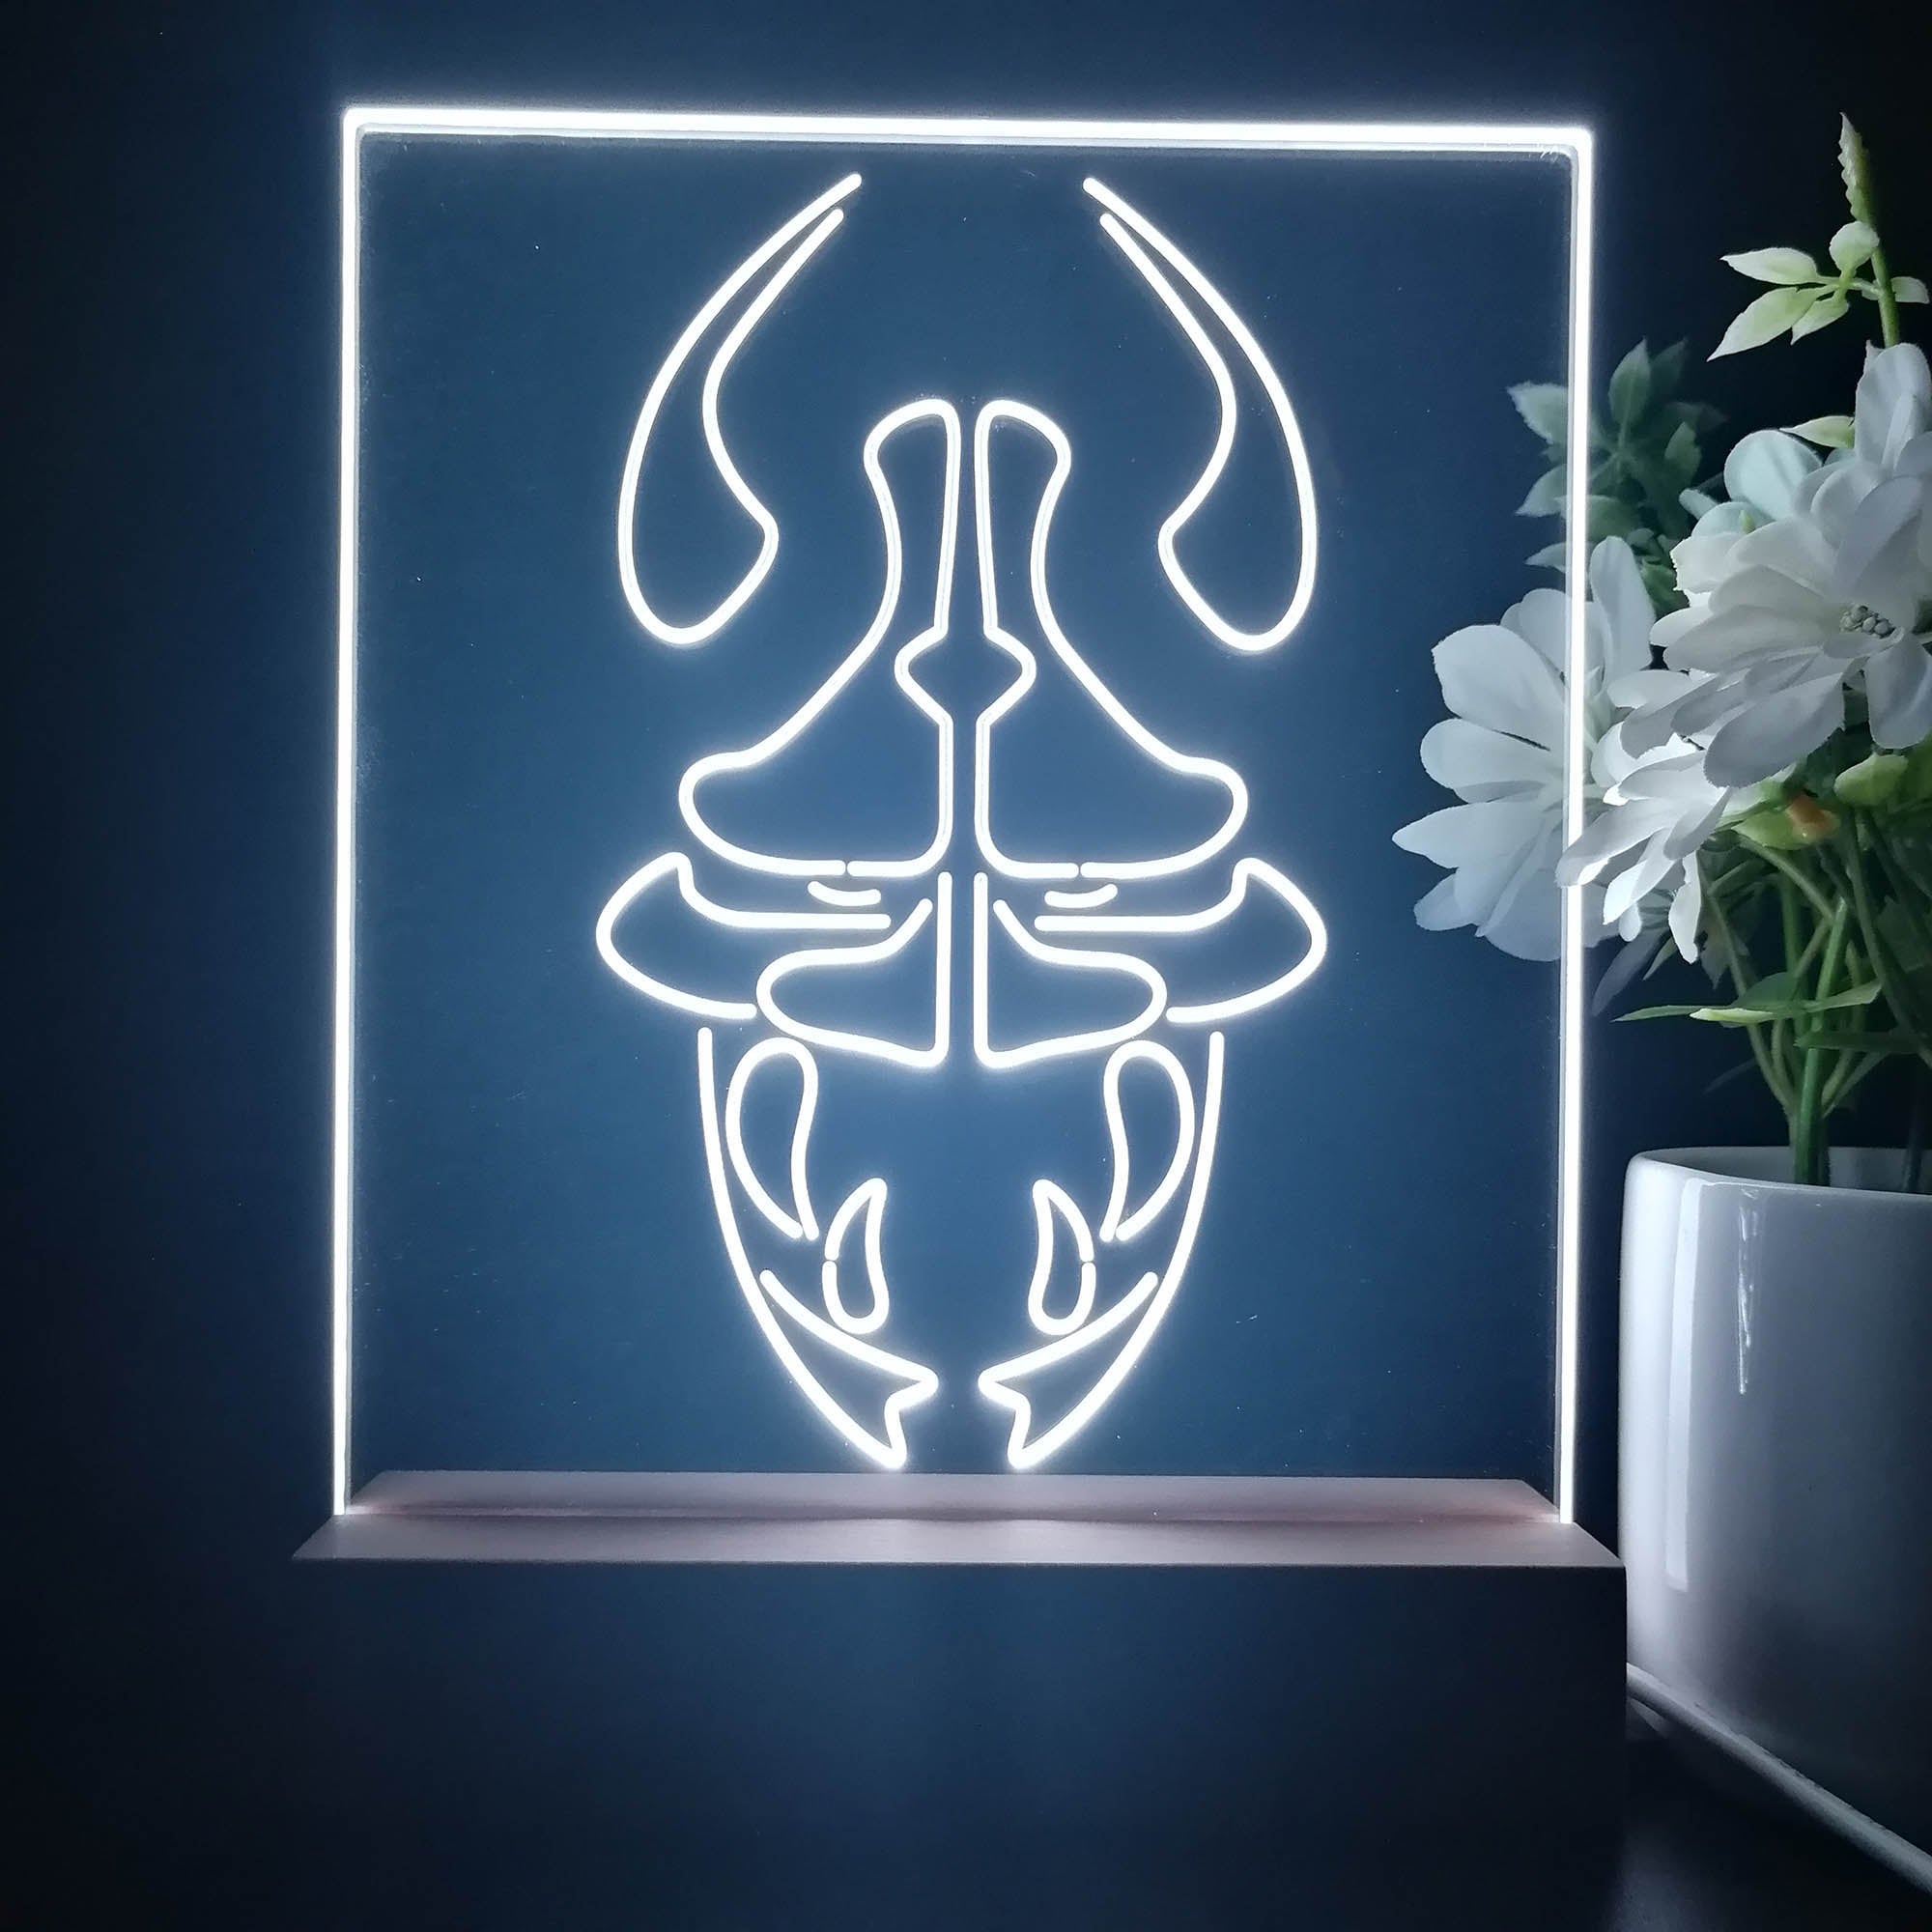 Ramen to Biiru 3D Illusion Night Light Desk Lamp